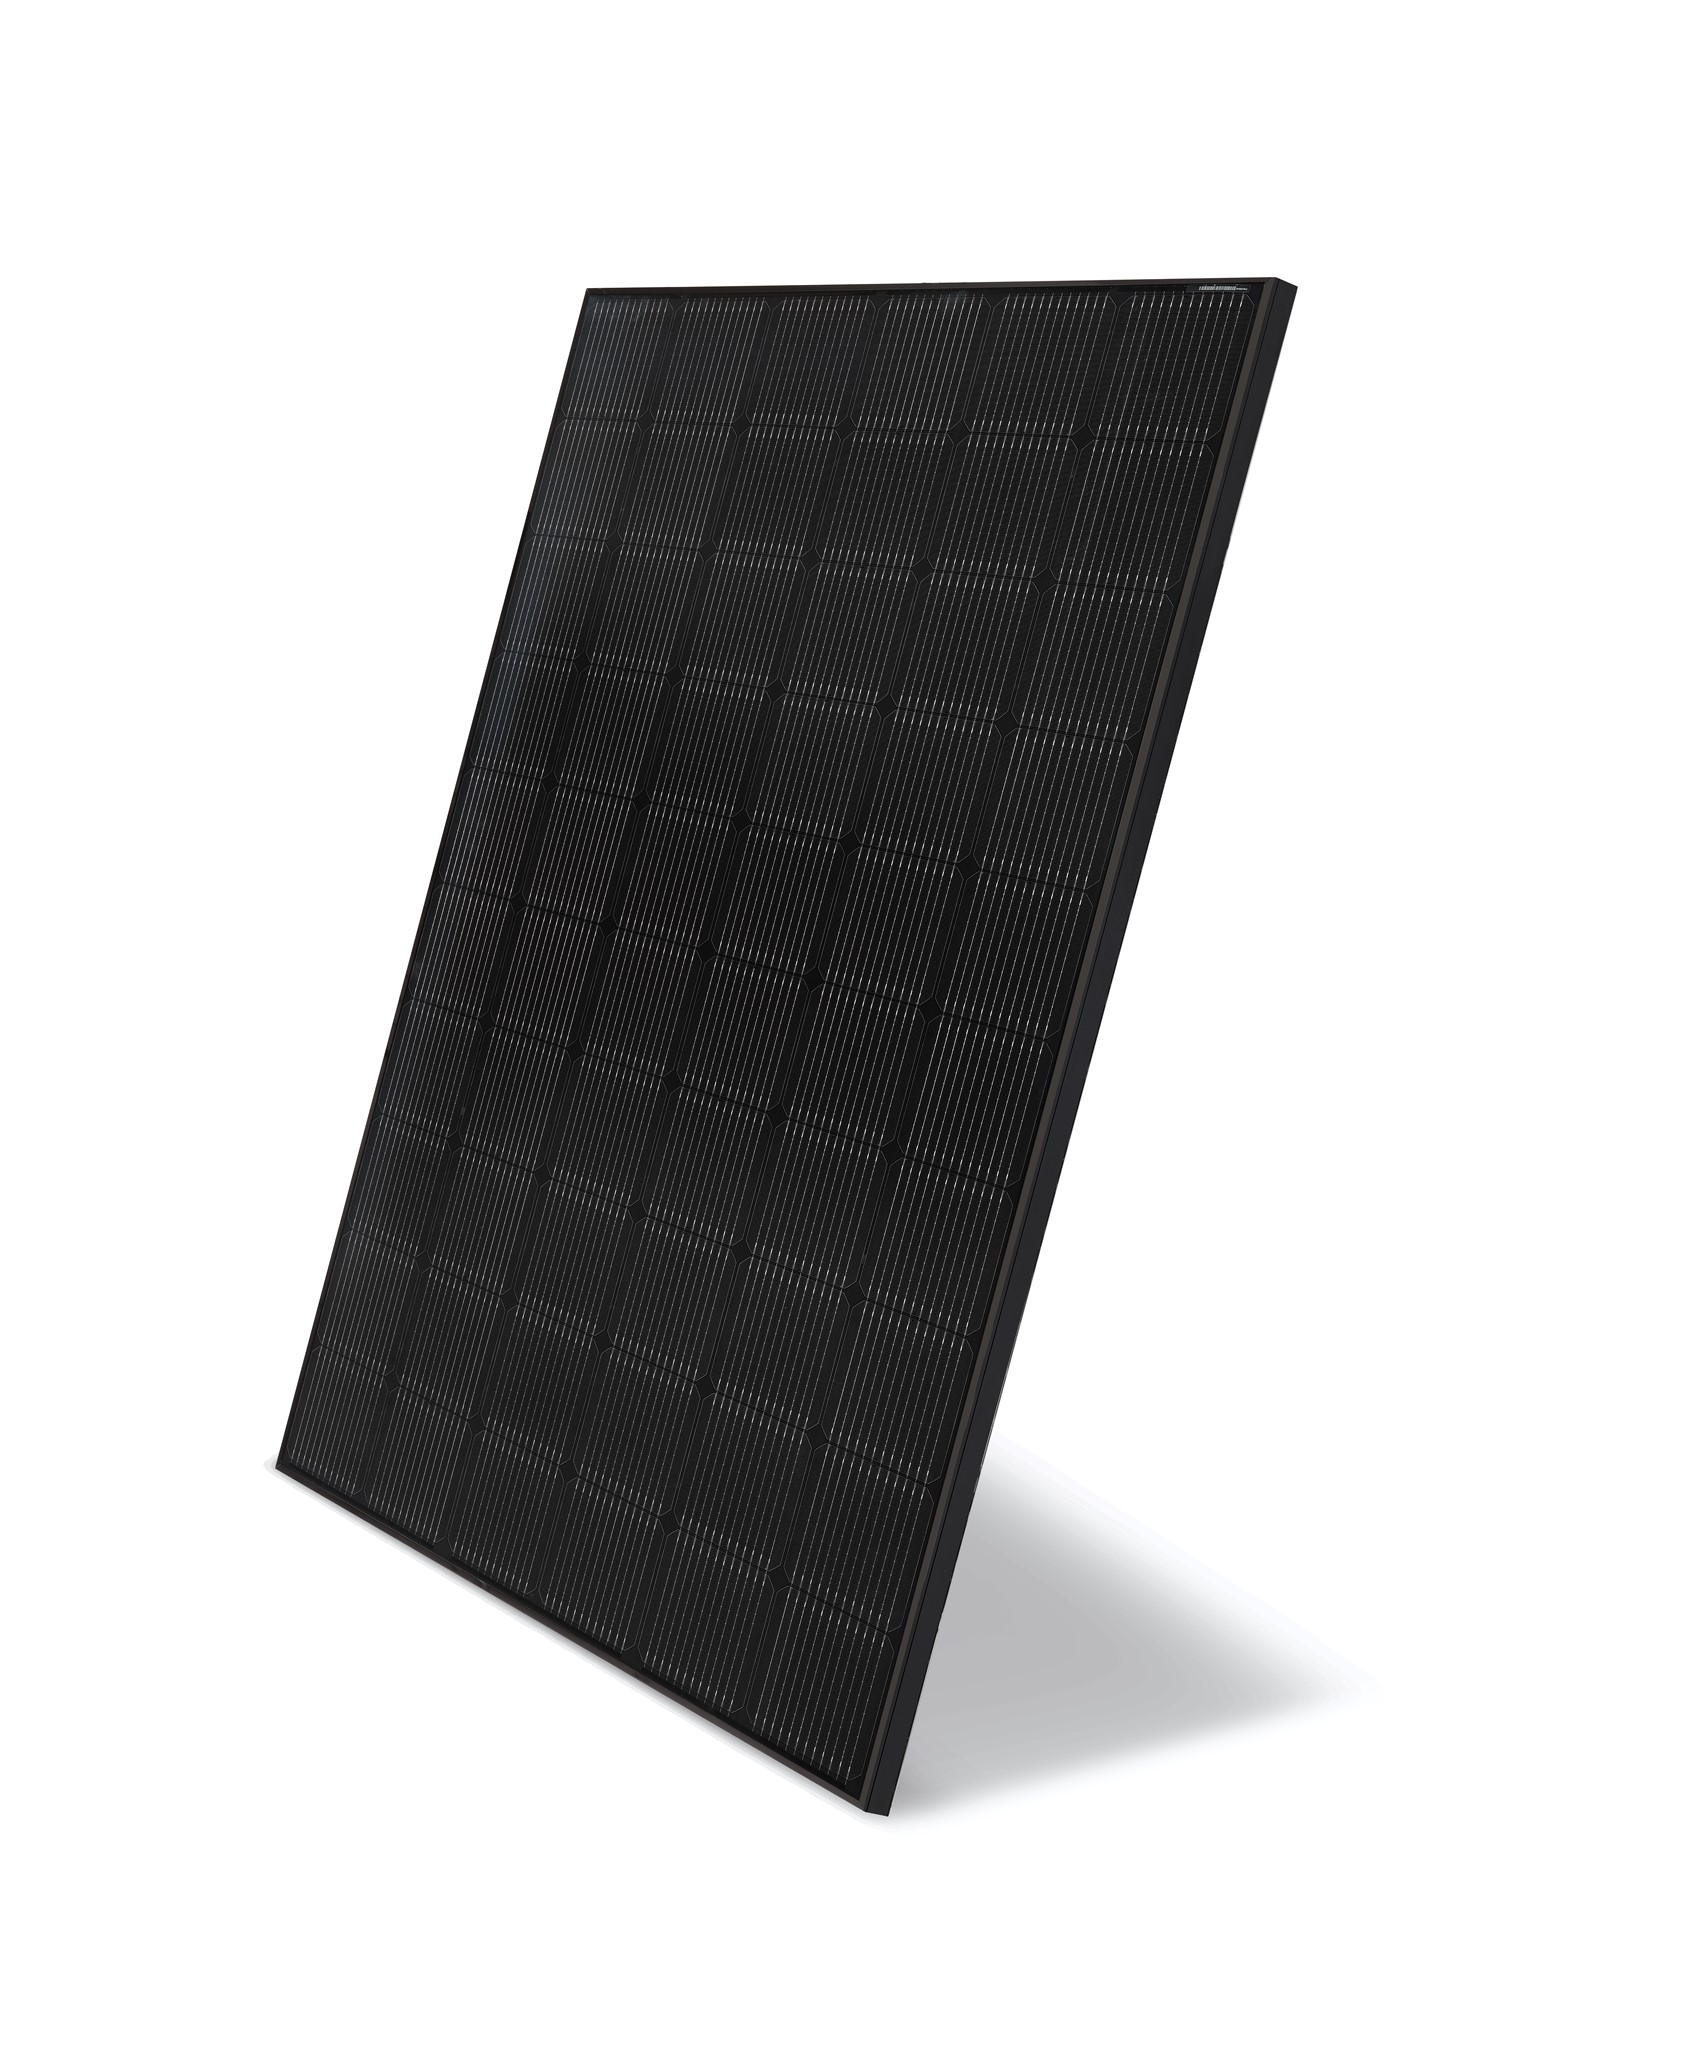 IWS SOLAR AG Solarmodul LG NeON 2 Black LG335N1KV5 (335 Wp)